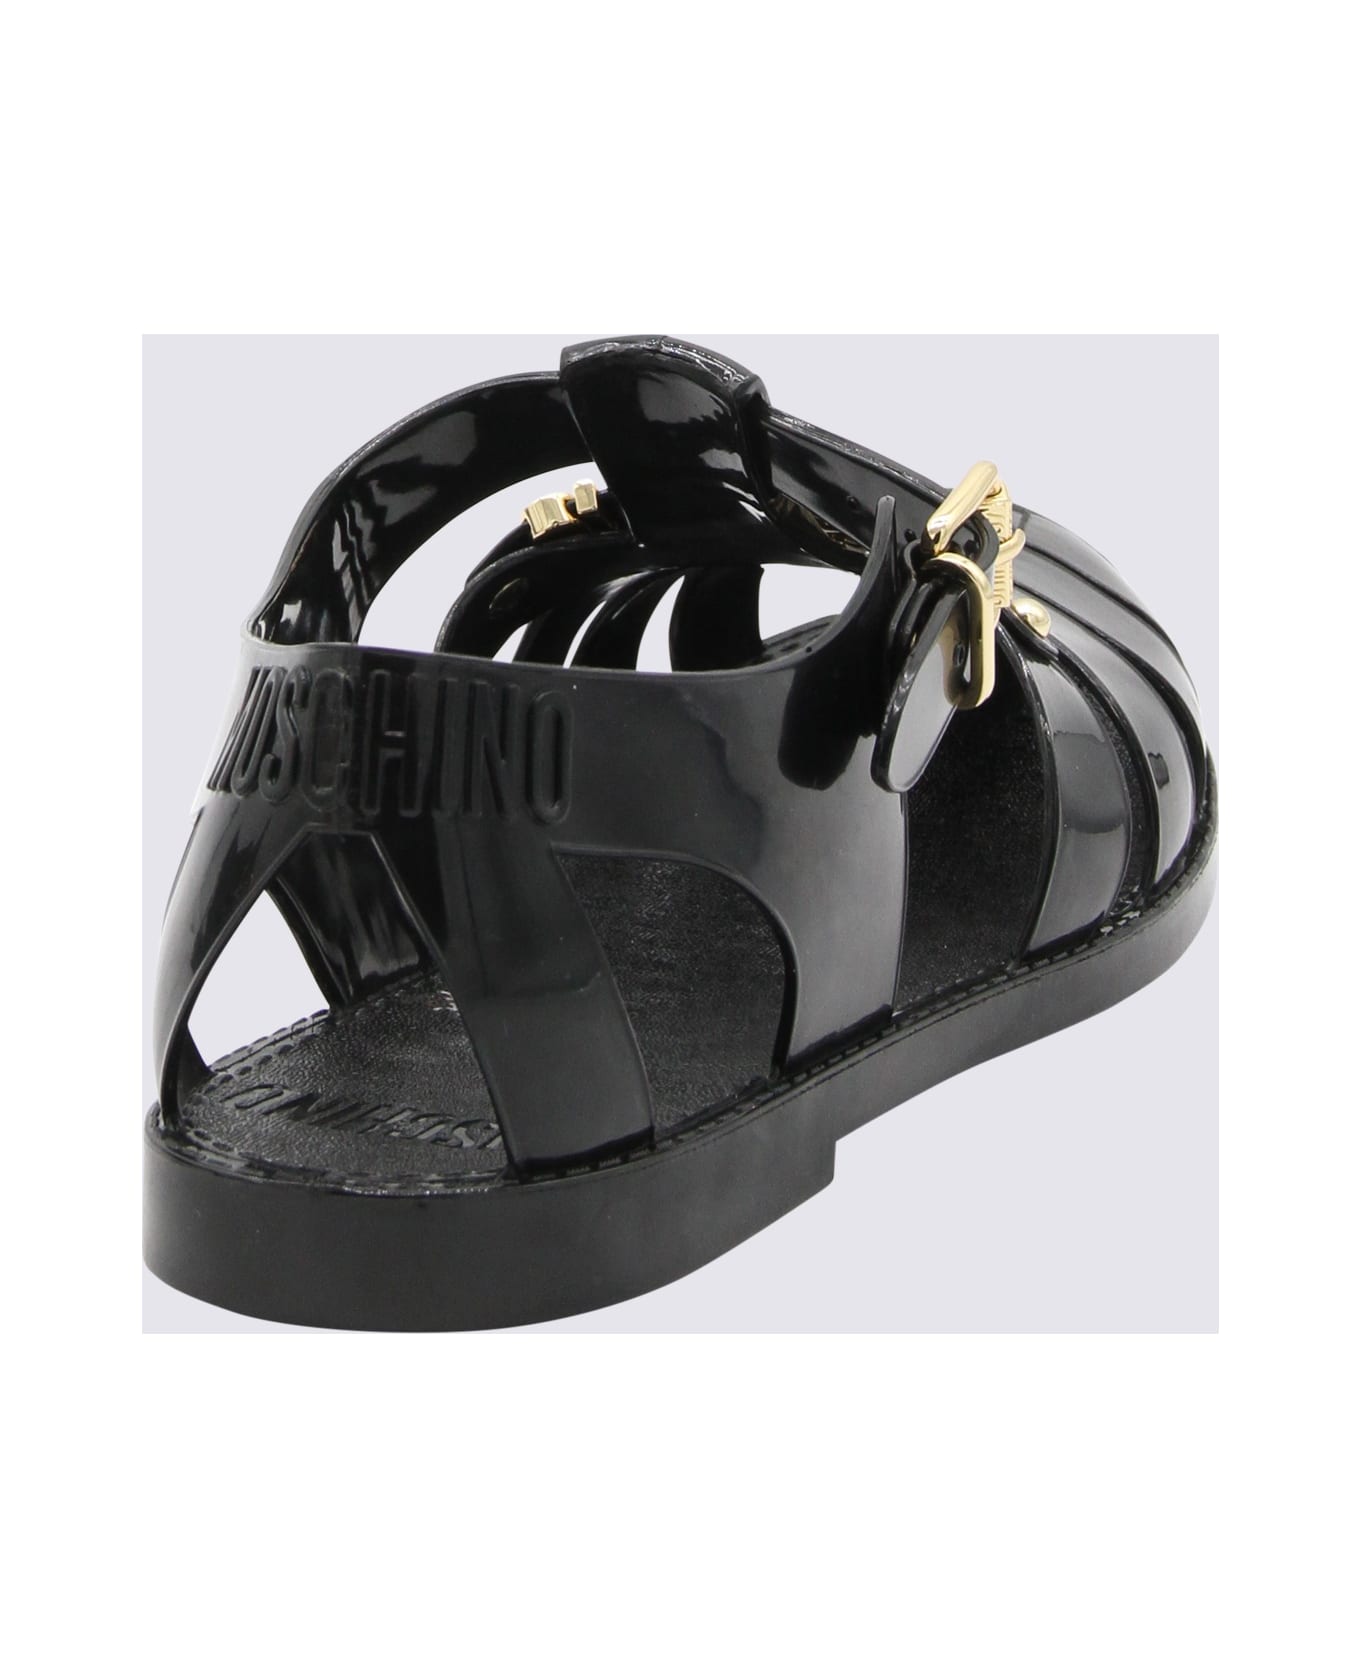 Moschino Black Rubber Sandals - Black